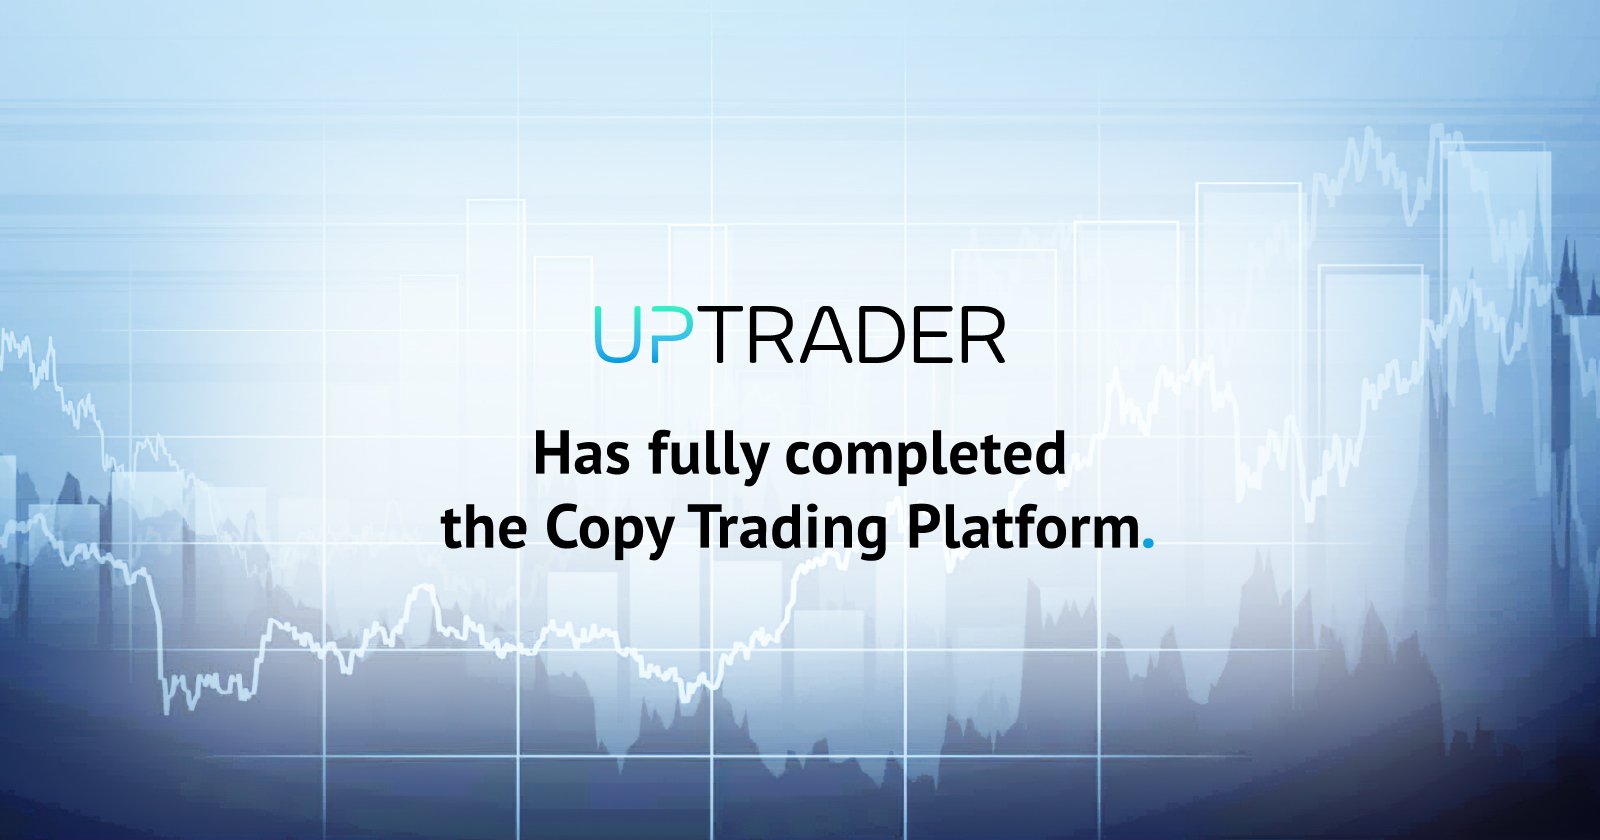 UpTrader has fully completed the Copy Trading Platform service development for MetaTrader 4 and MetaTrader 5